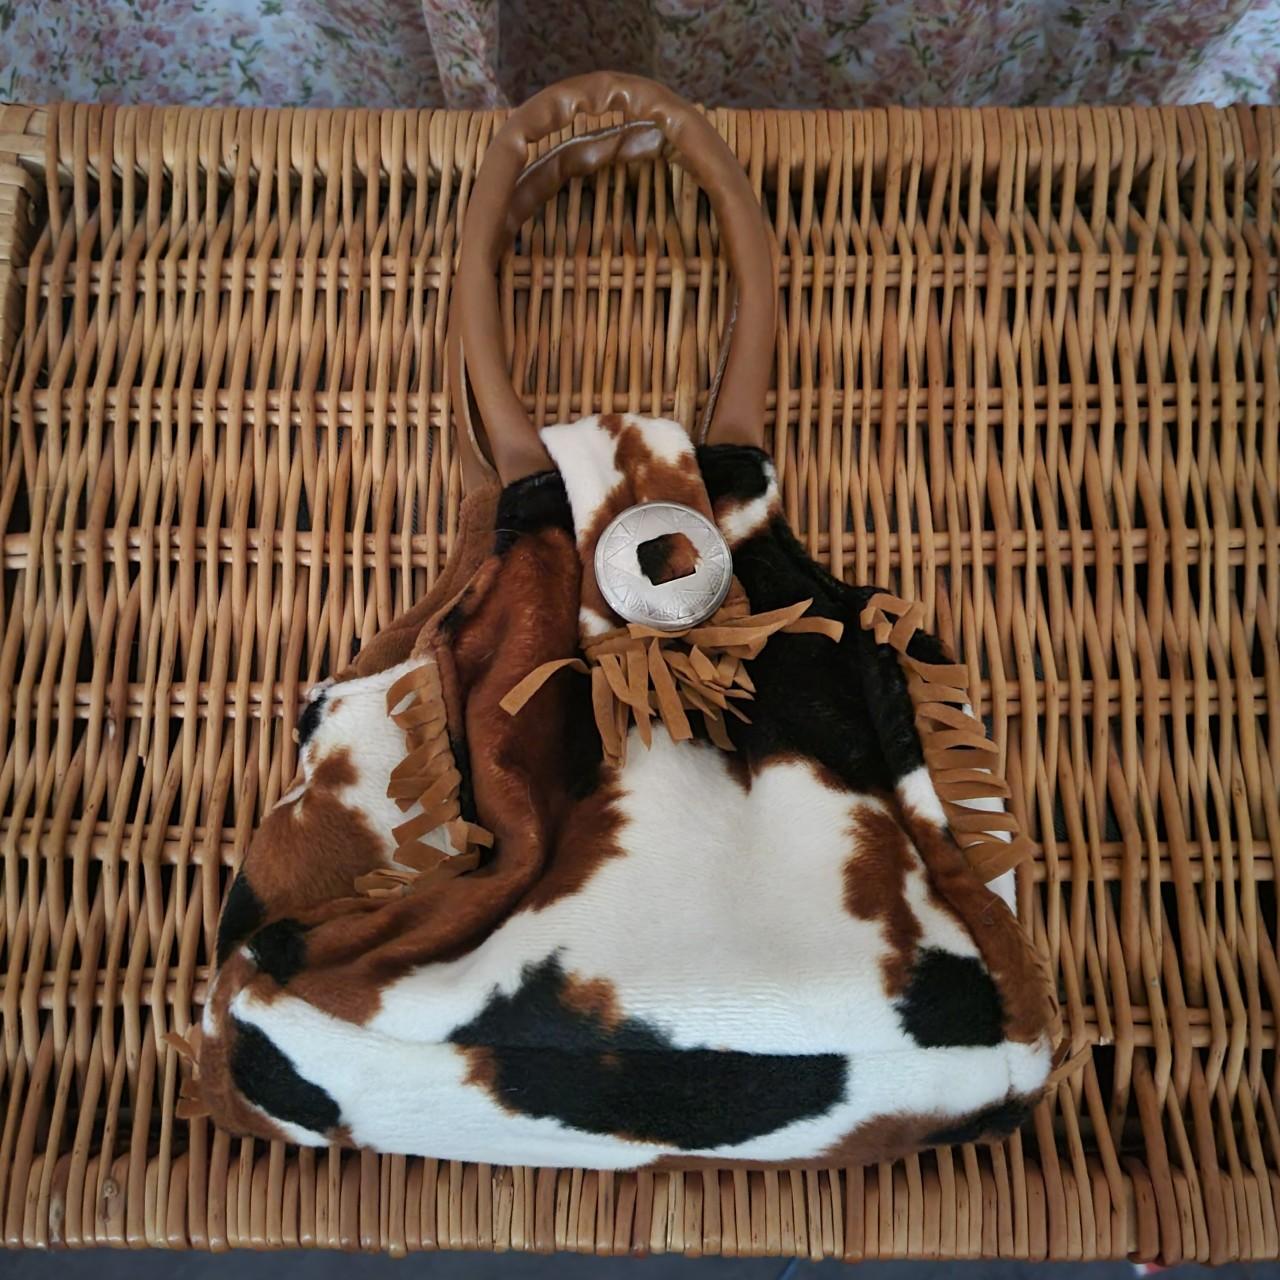 western cow print purse